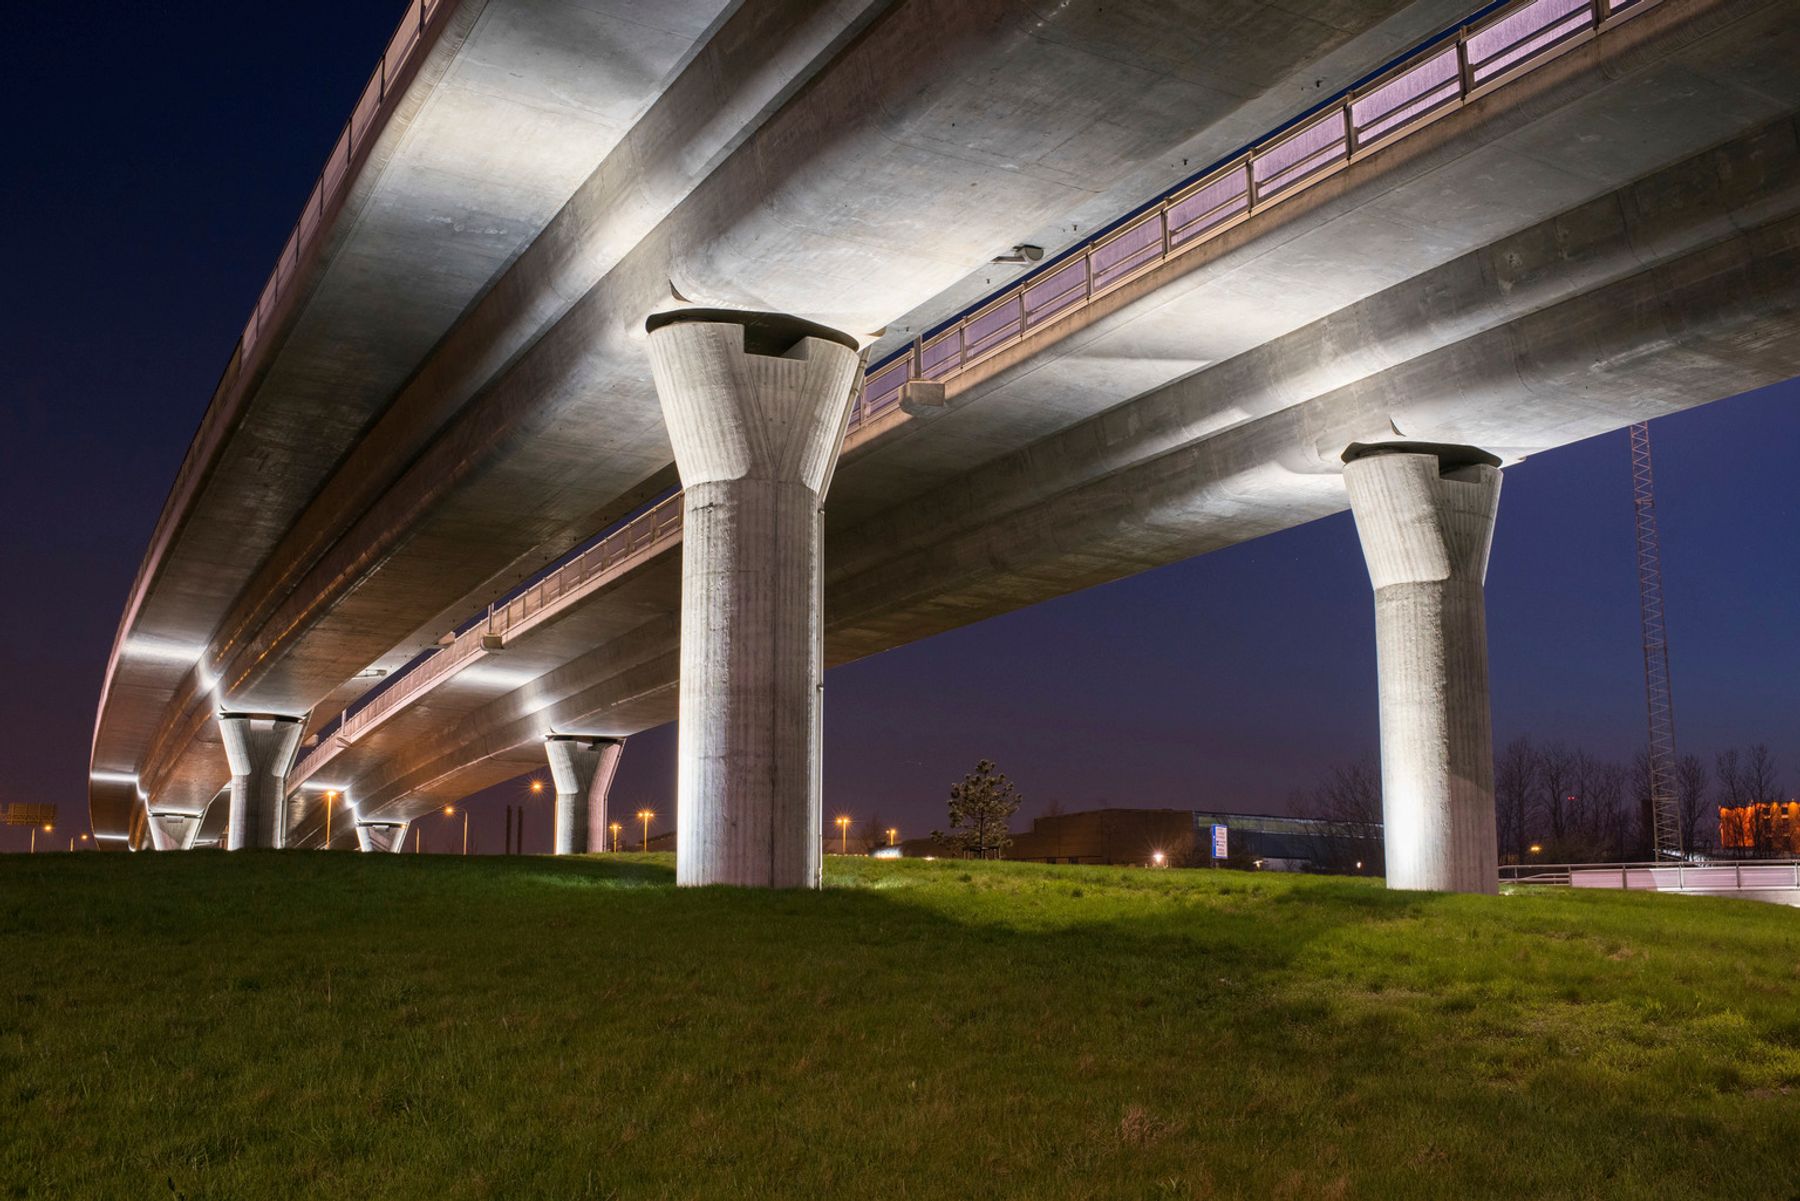 Ponte autostradale Trafikplats Spillepengen, Malmö. Progettazione illuminotecnica: Malmö City, Johan Moritz. Fotografia: Johan Elm, Stoccolma.